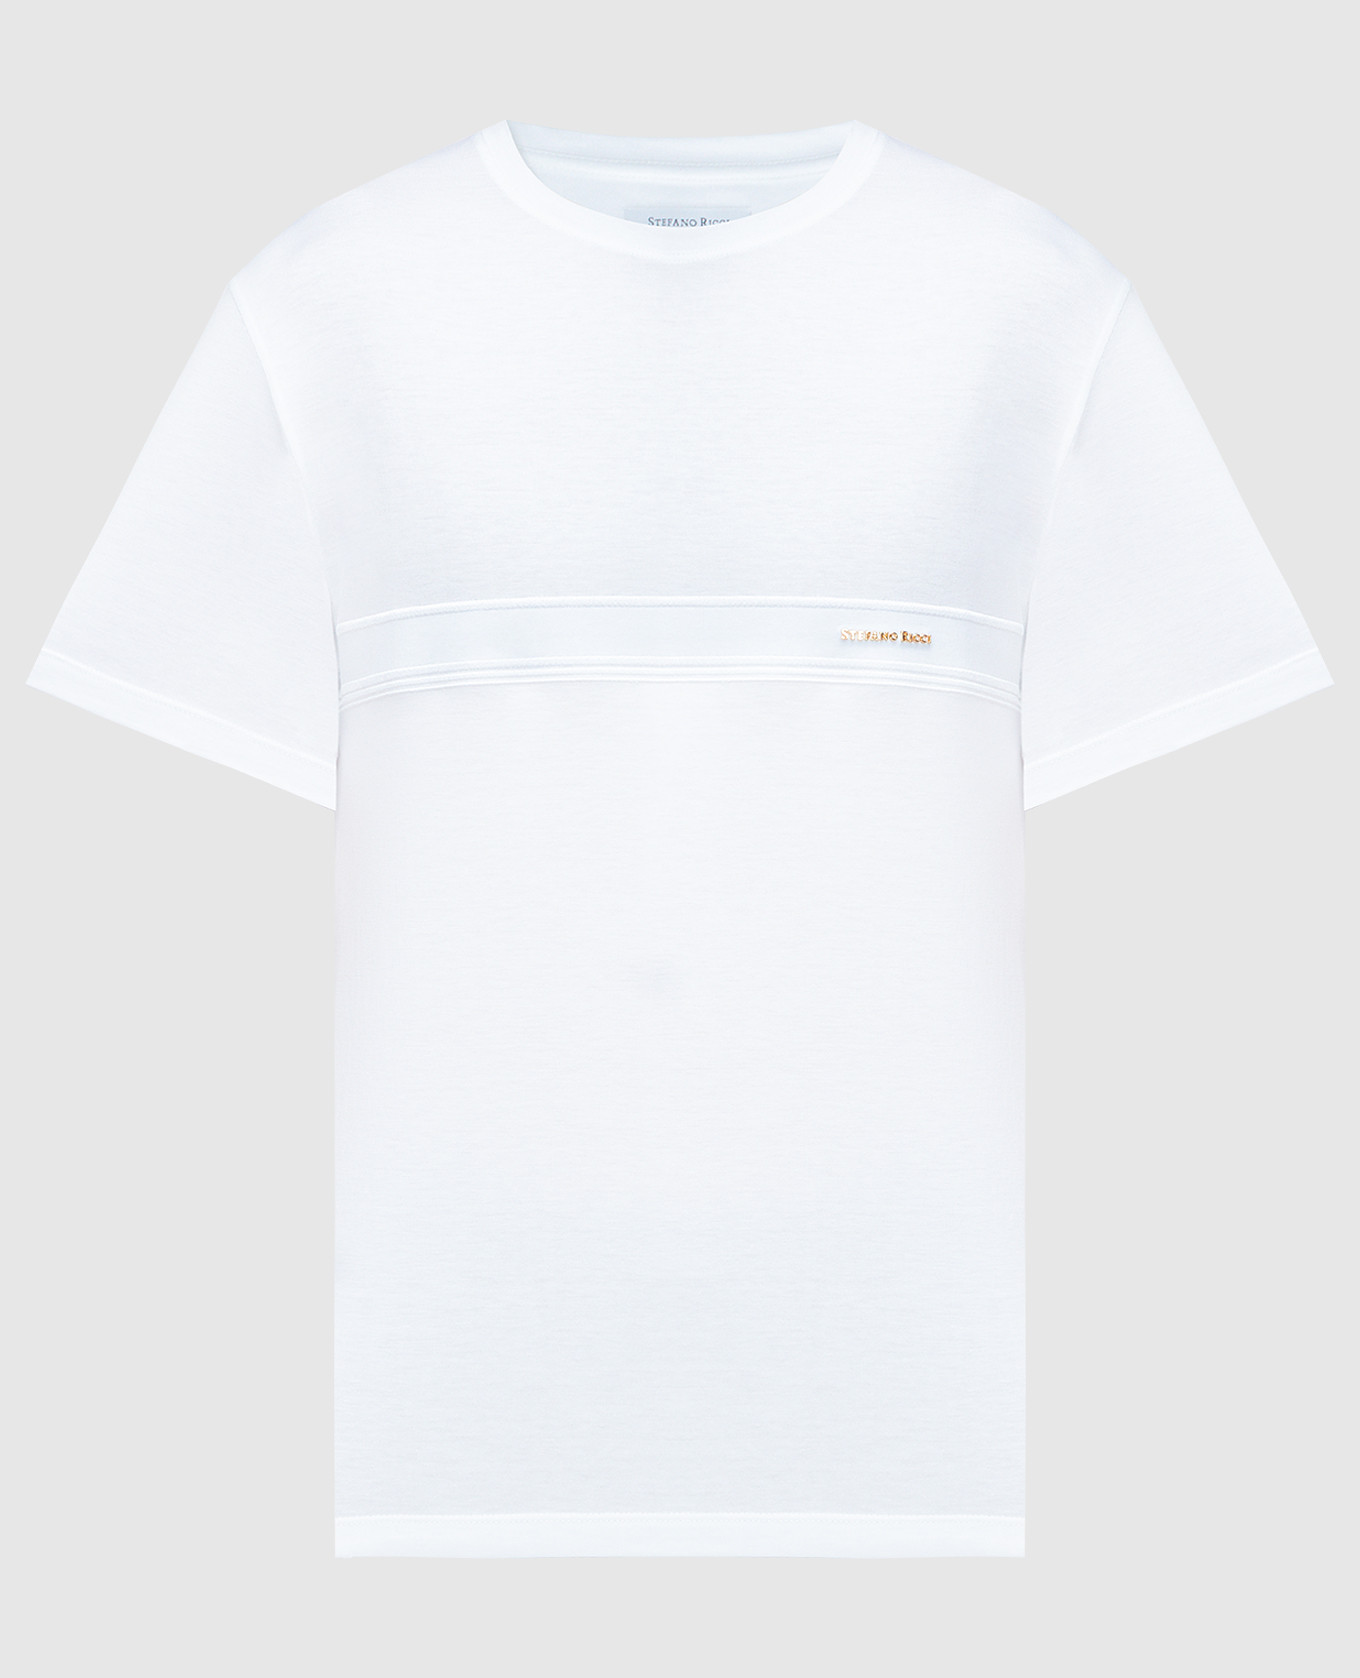 White t-shirt with metallic logo